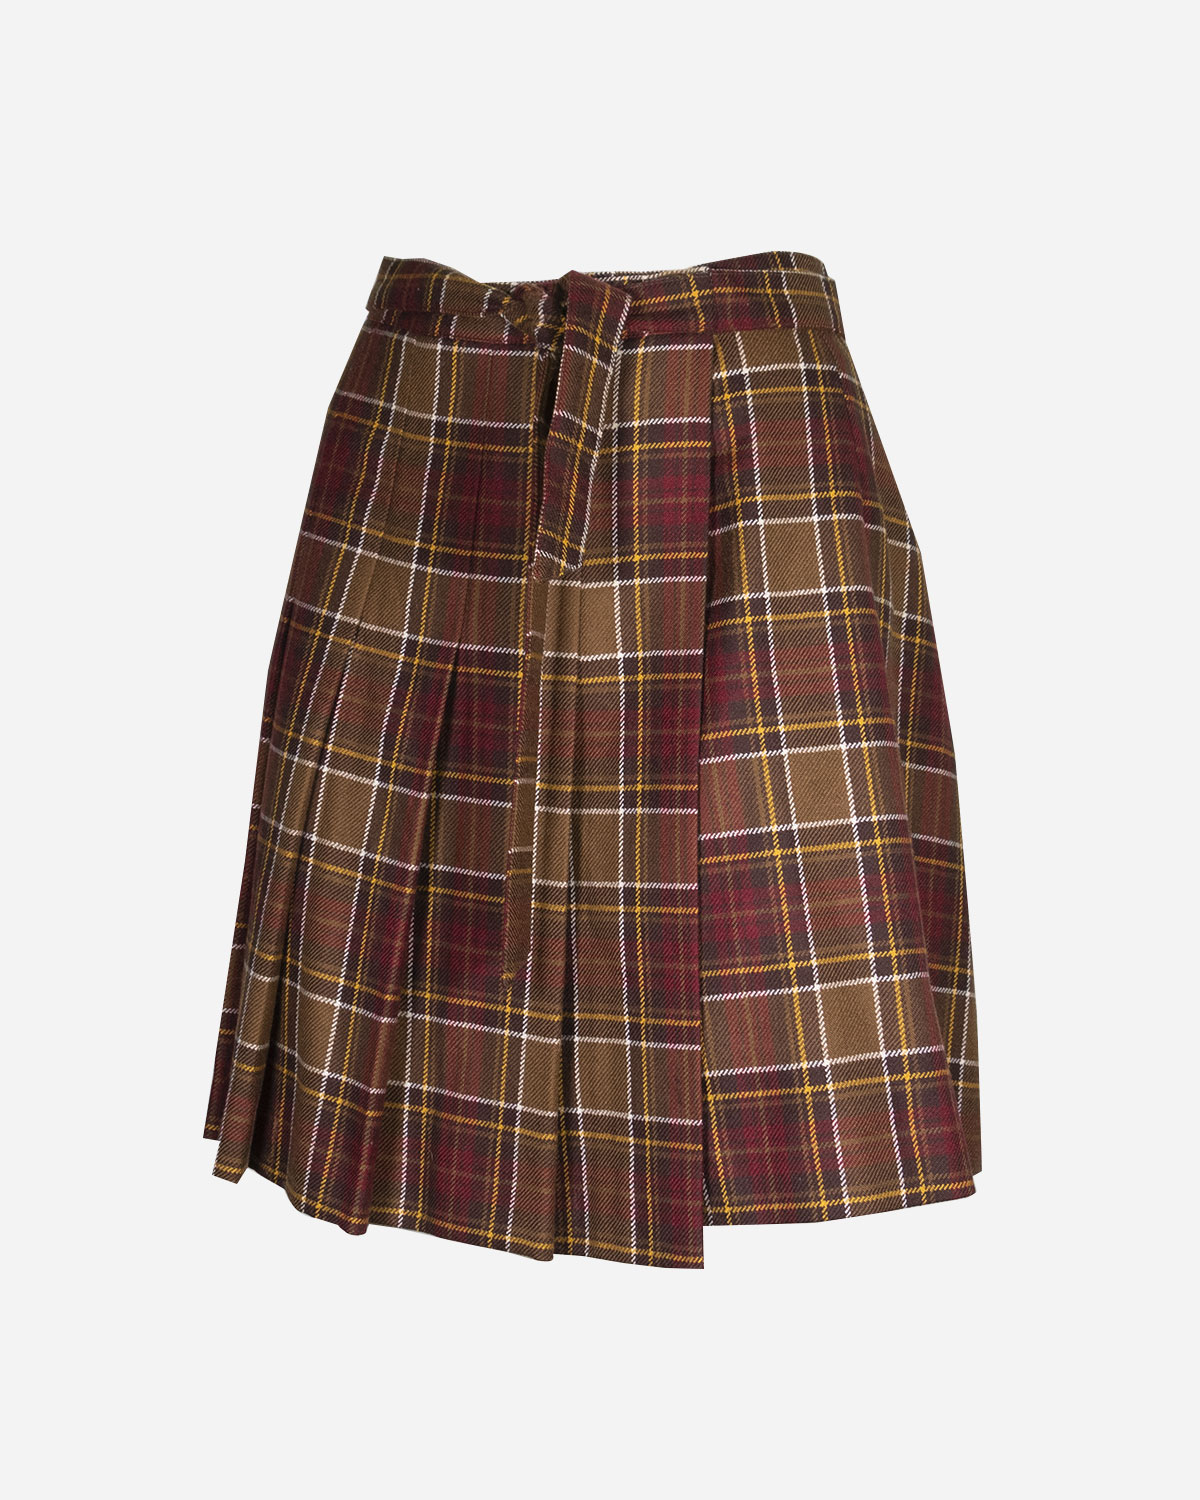 Women’s colorful tartan miniskirts: 4 pieces